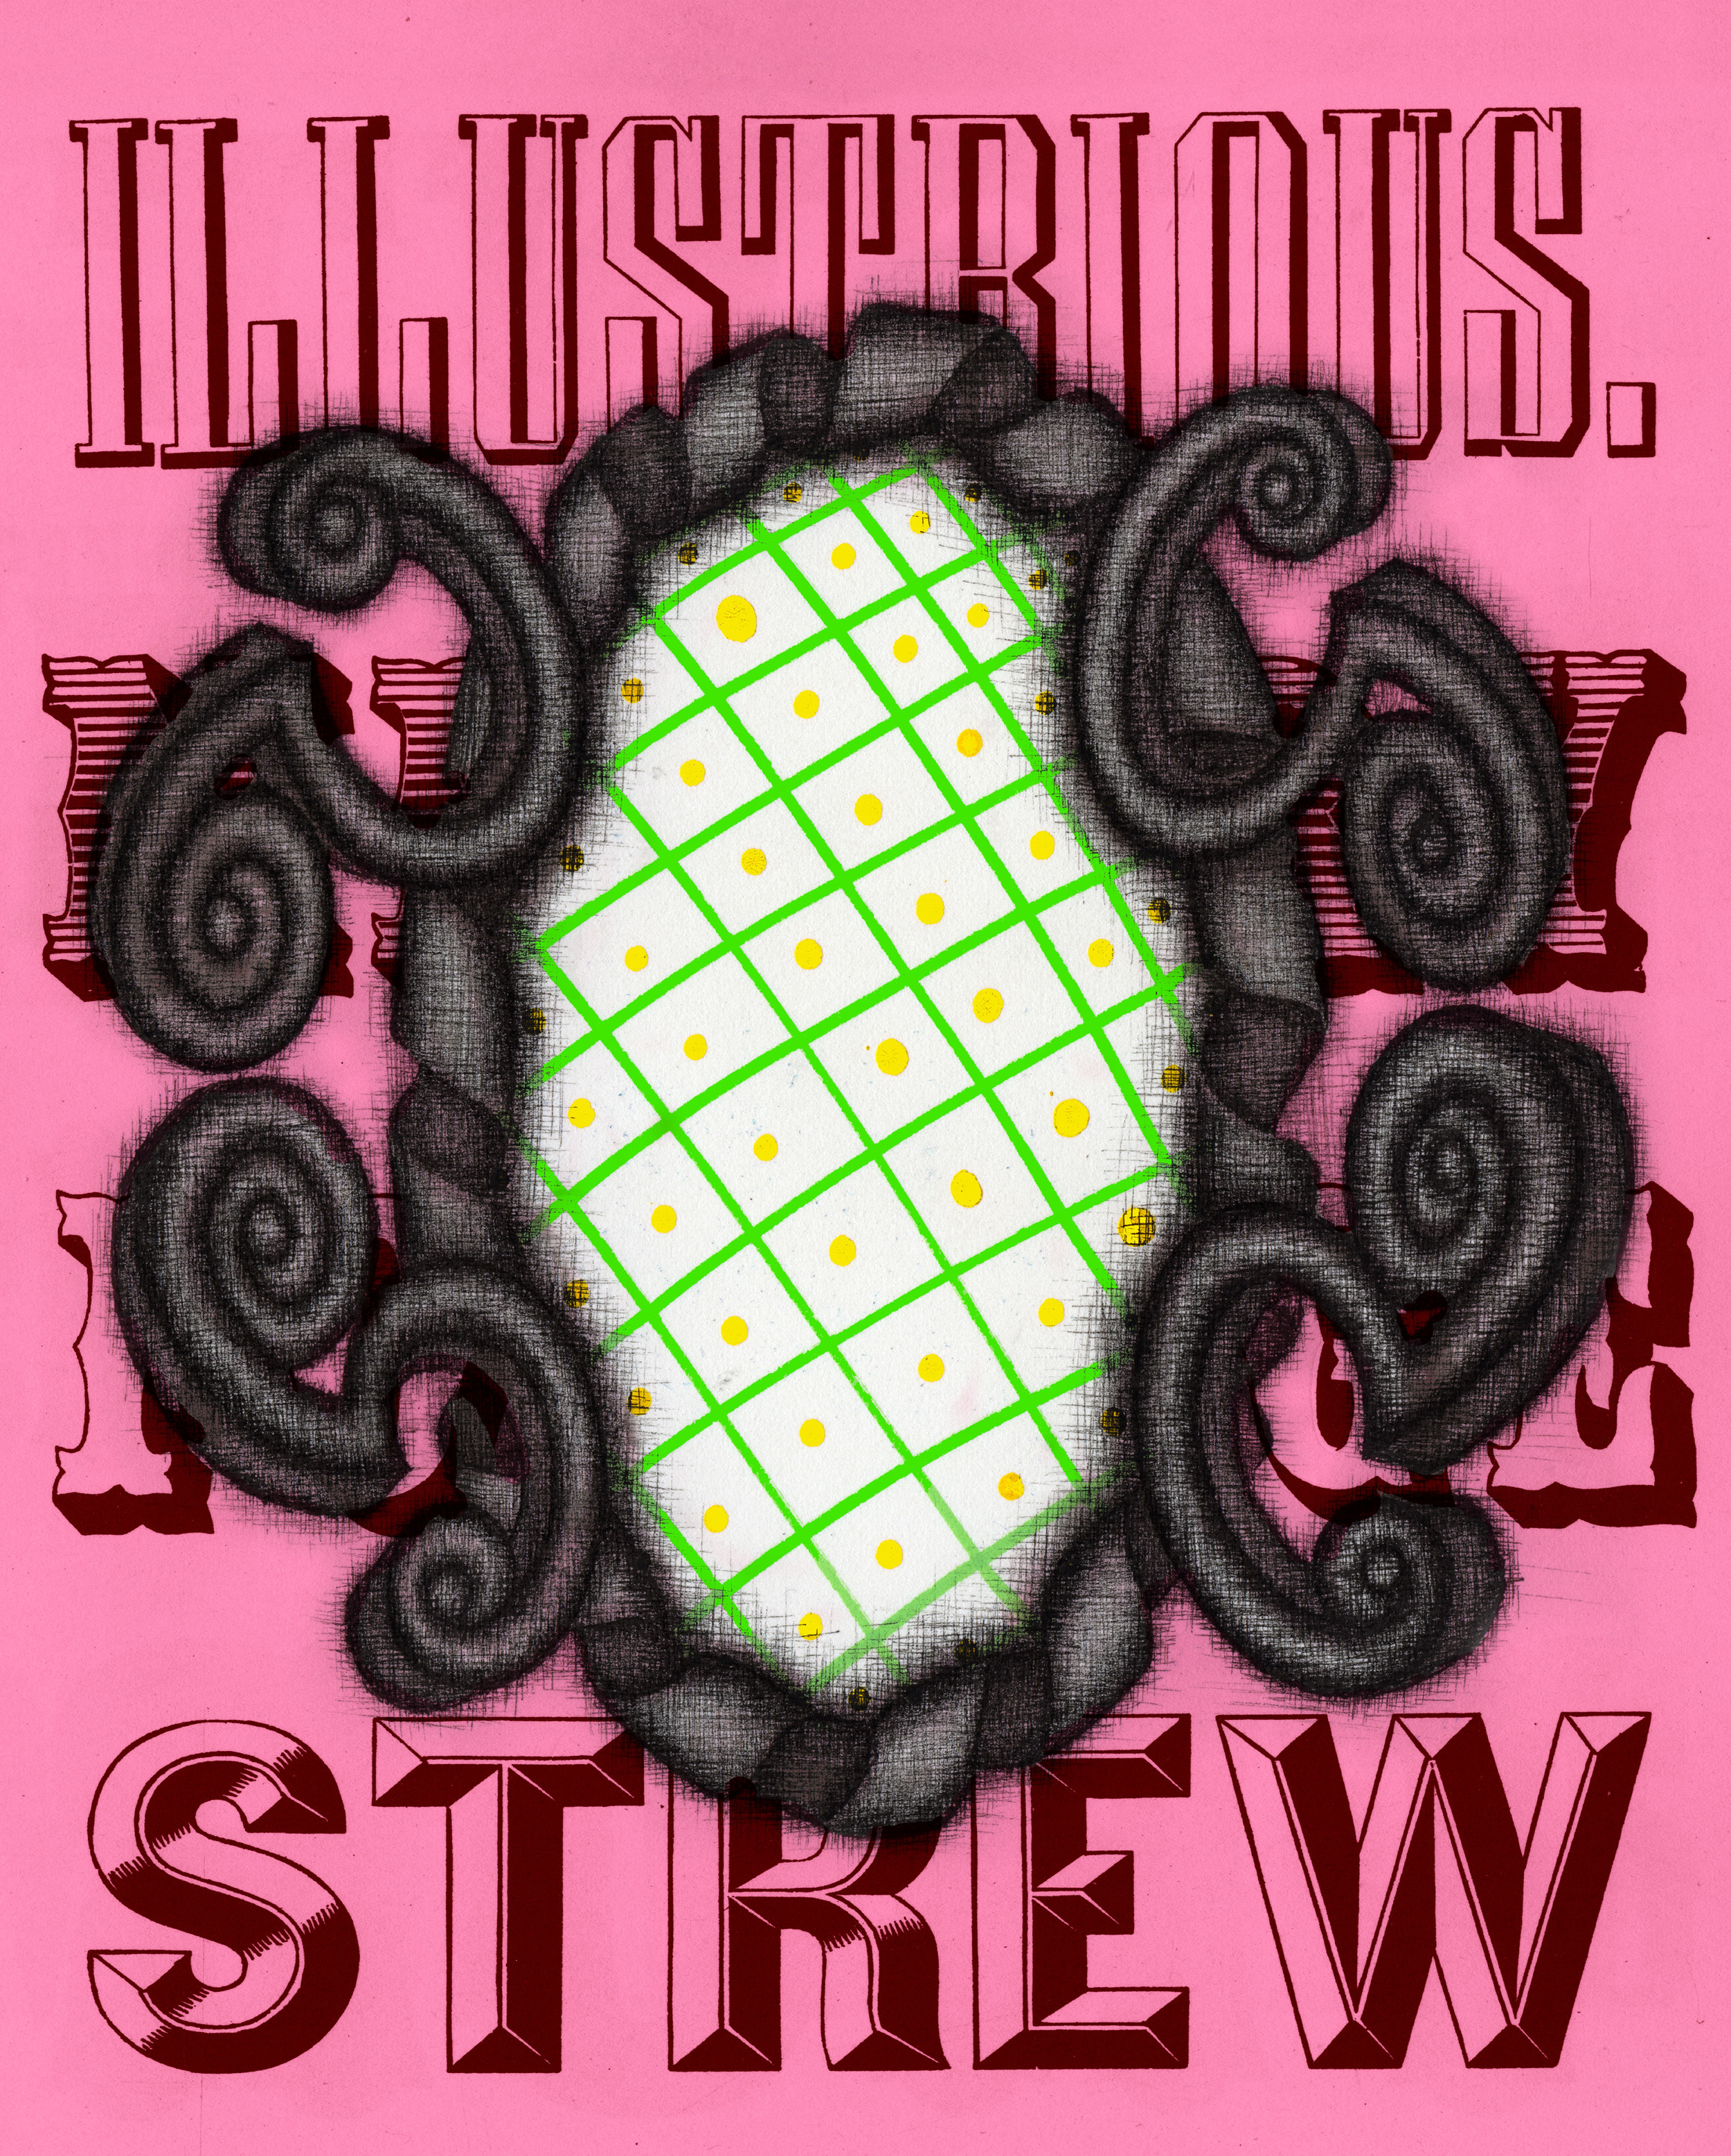 Illustrious Strew, 2013